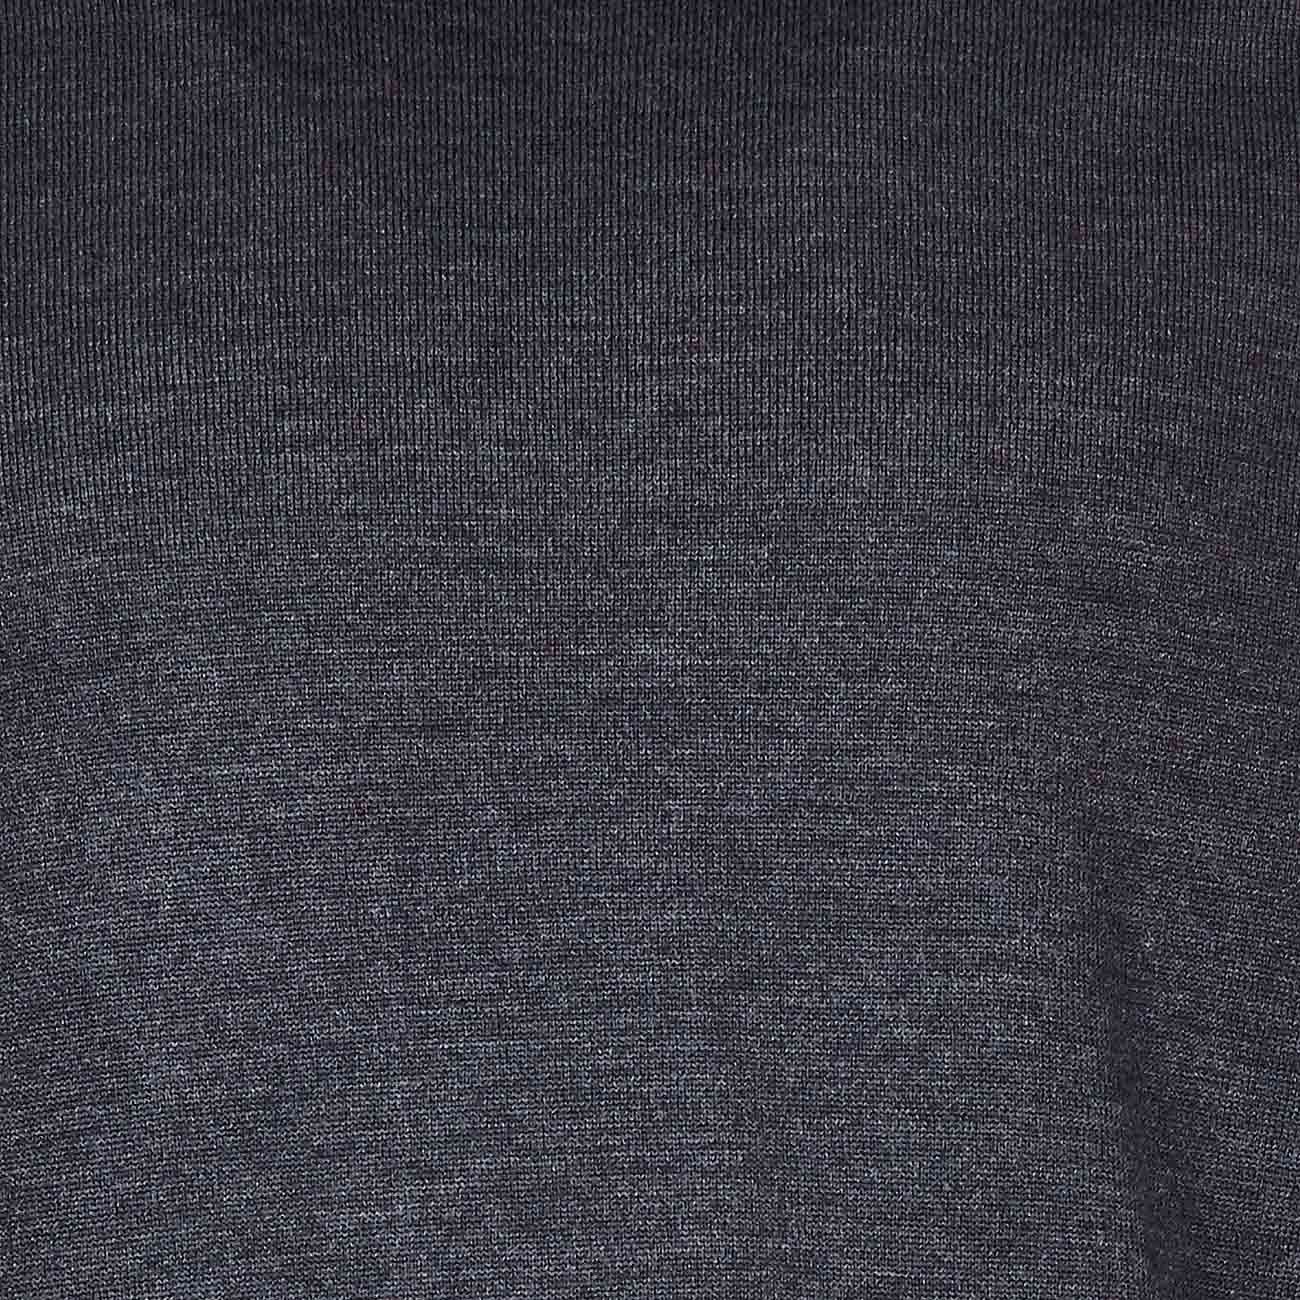 Charcoal Melange Merino Sweater